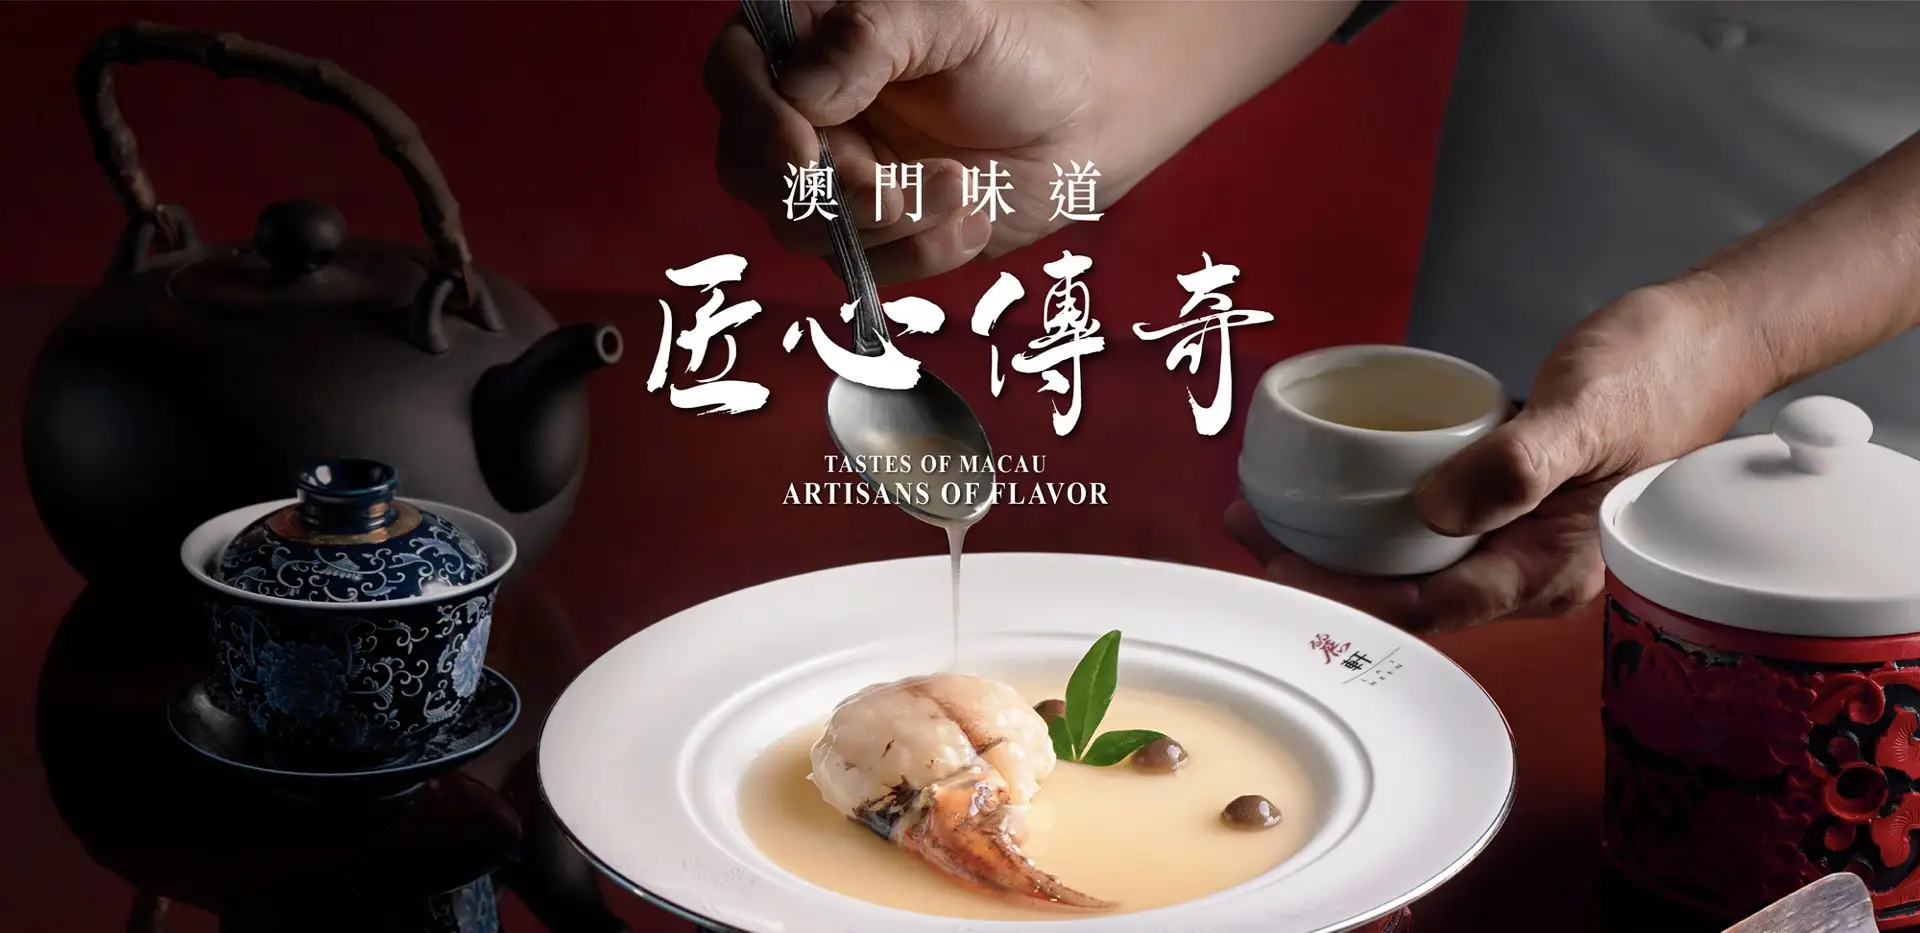 Tastes of Macau Artisans of Flavor